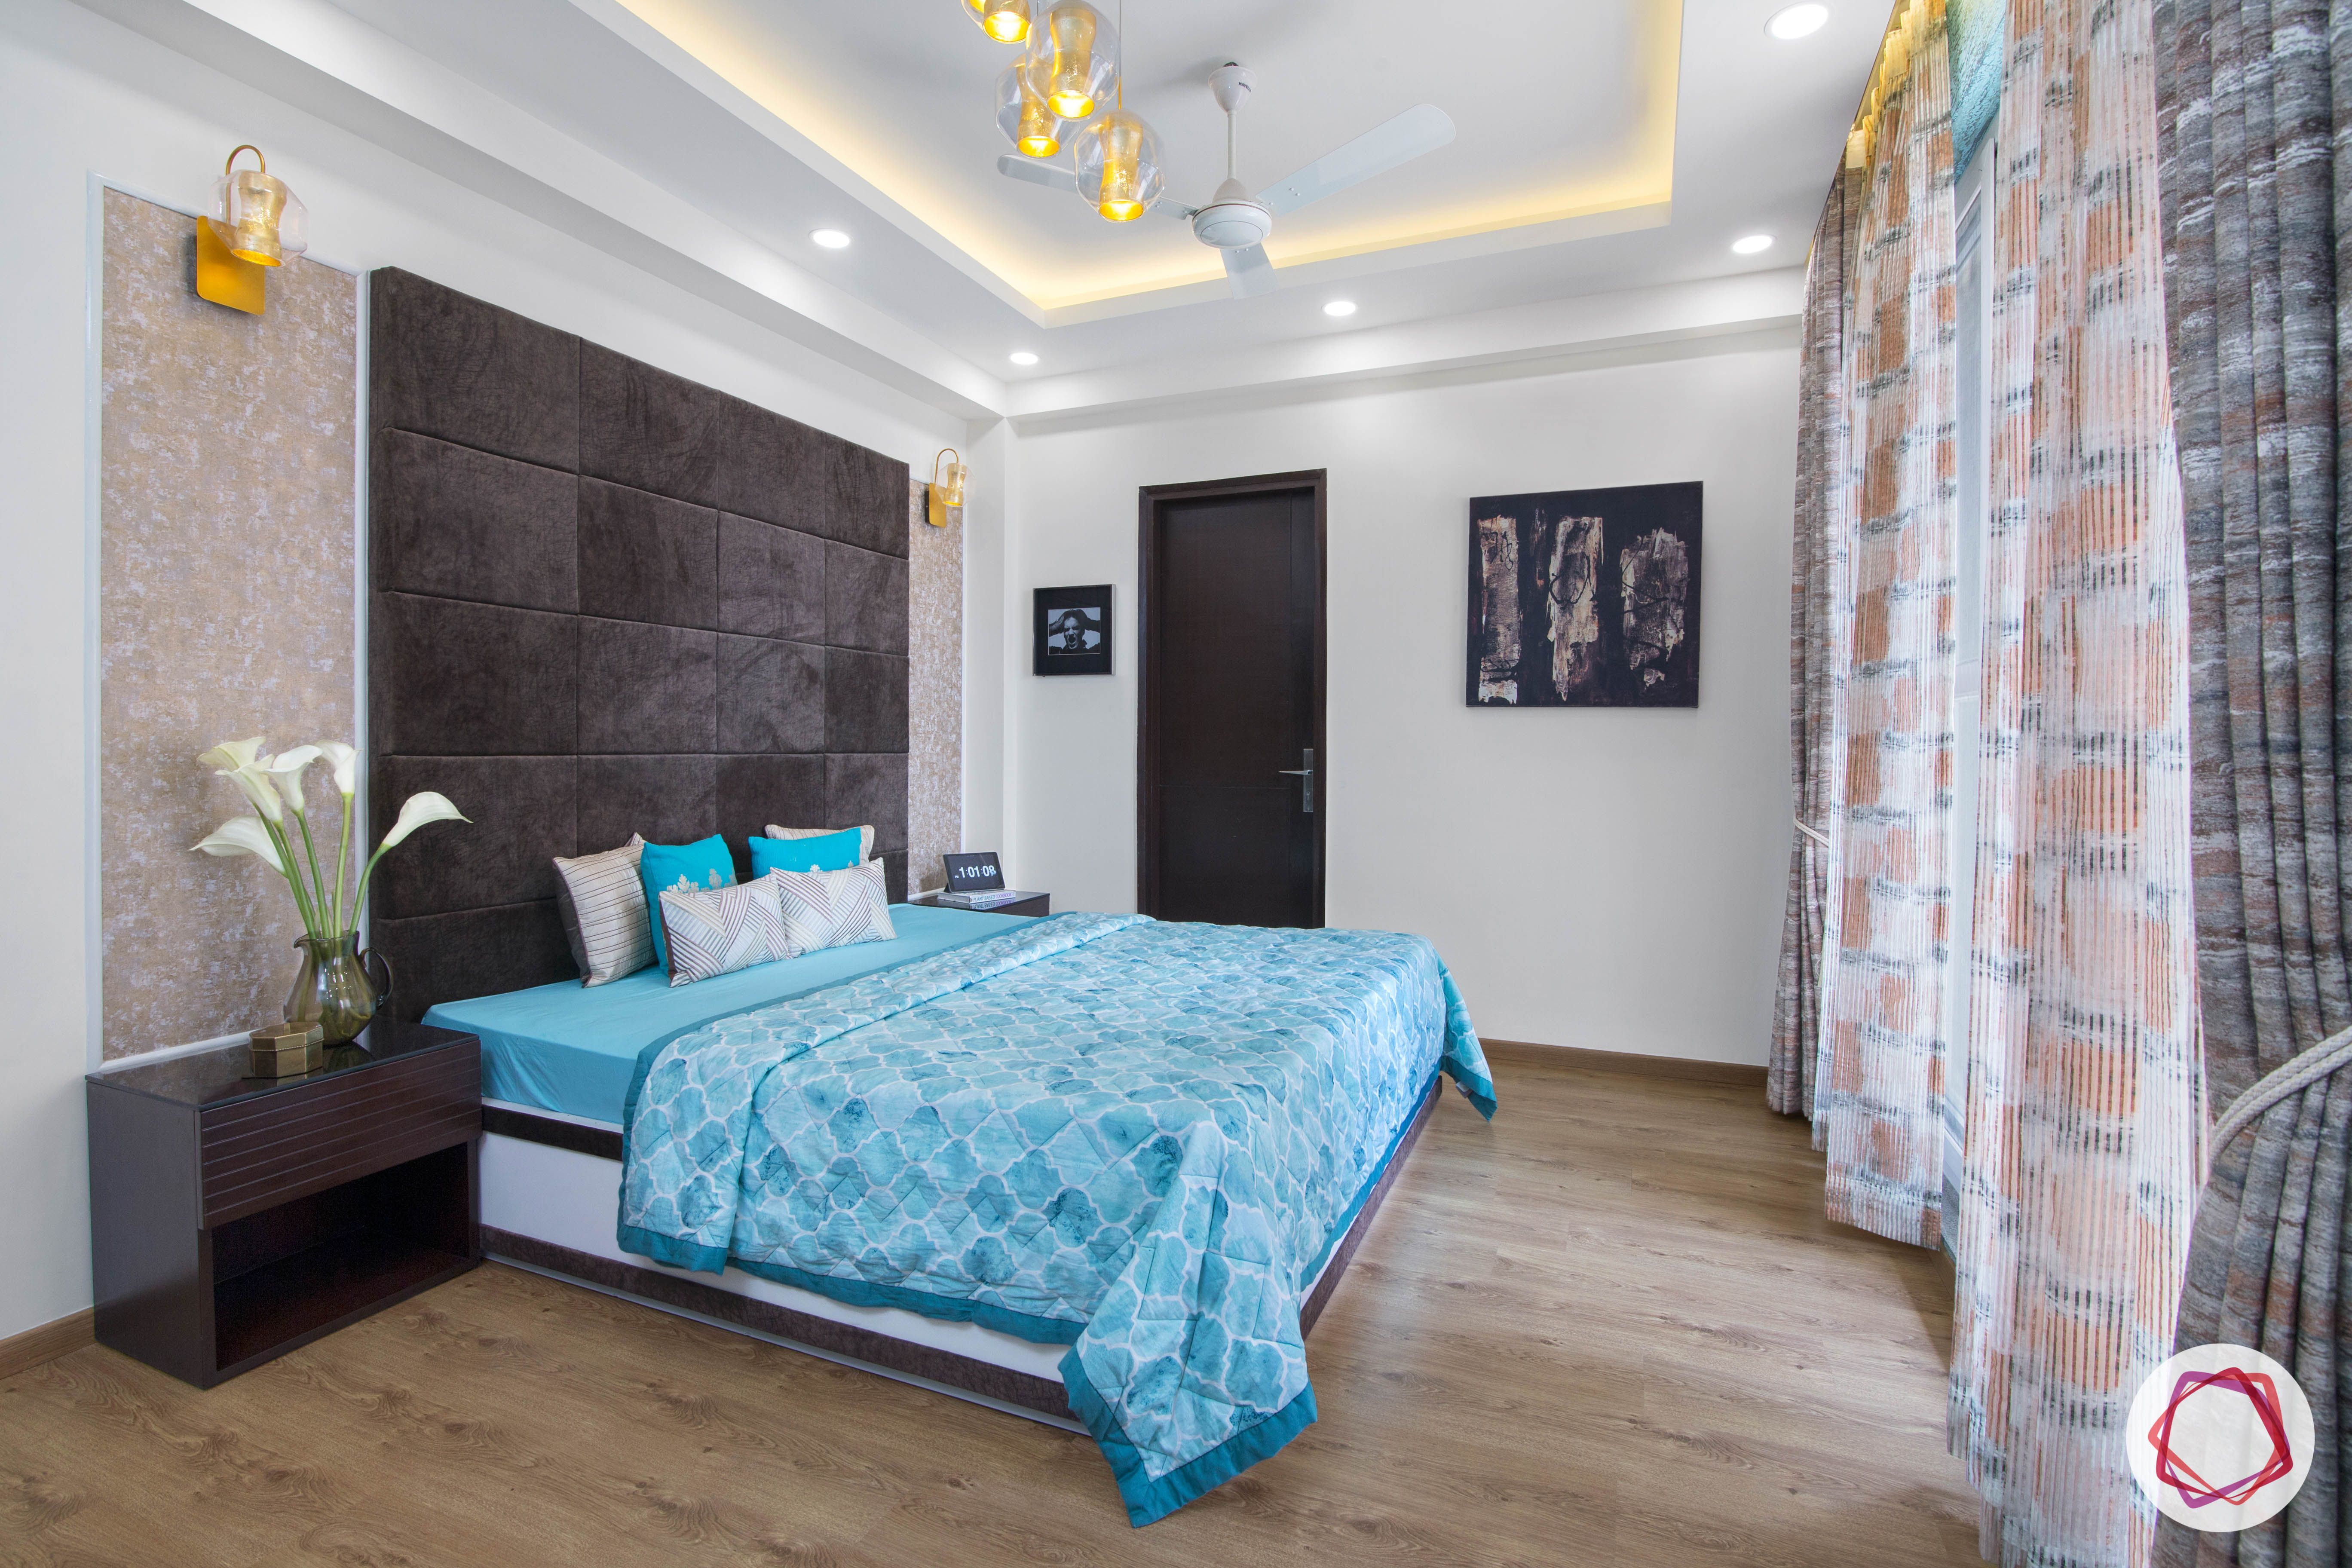 beautiful home design master bedroom blue bed